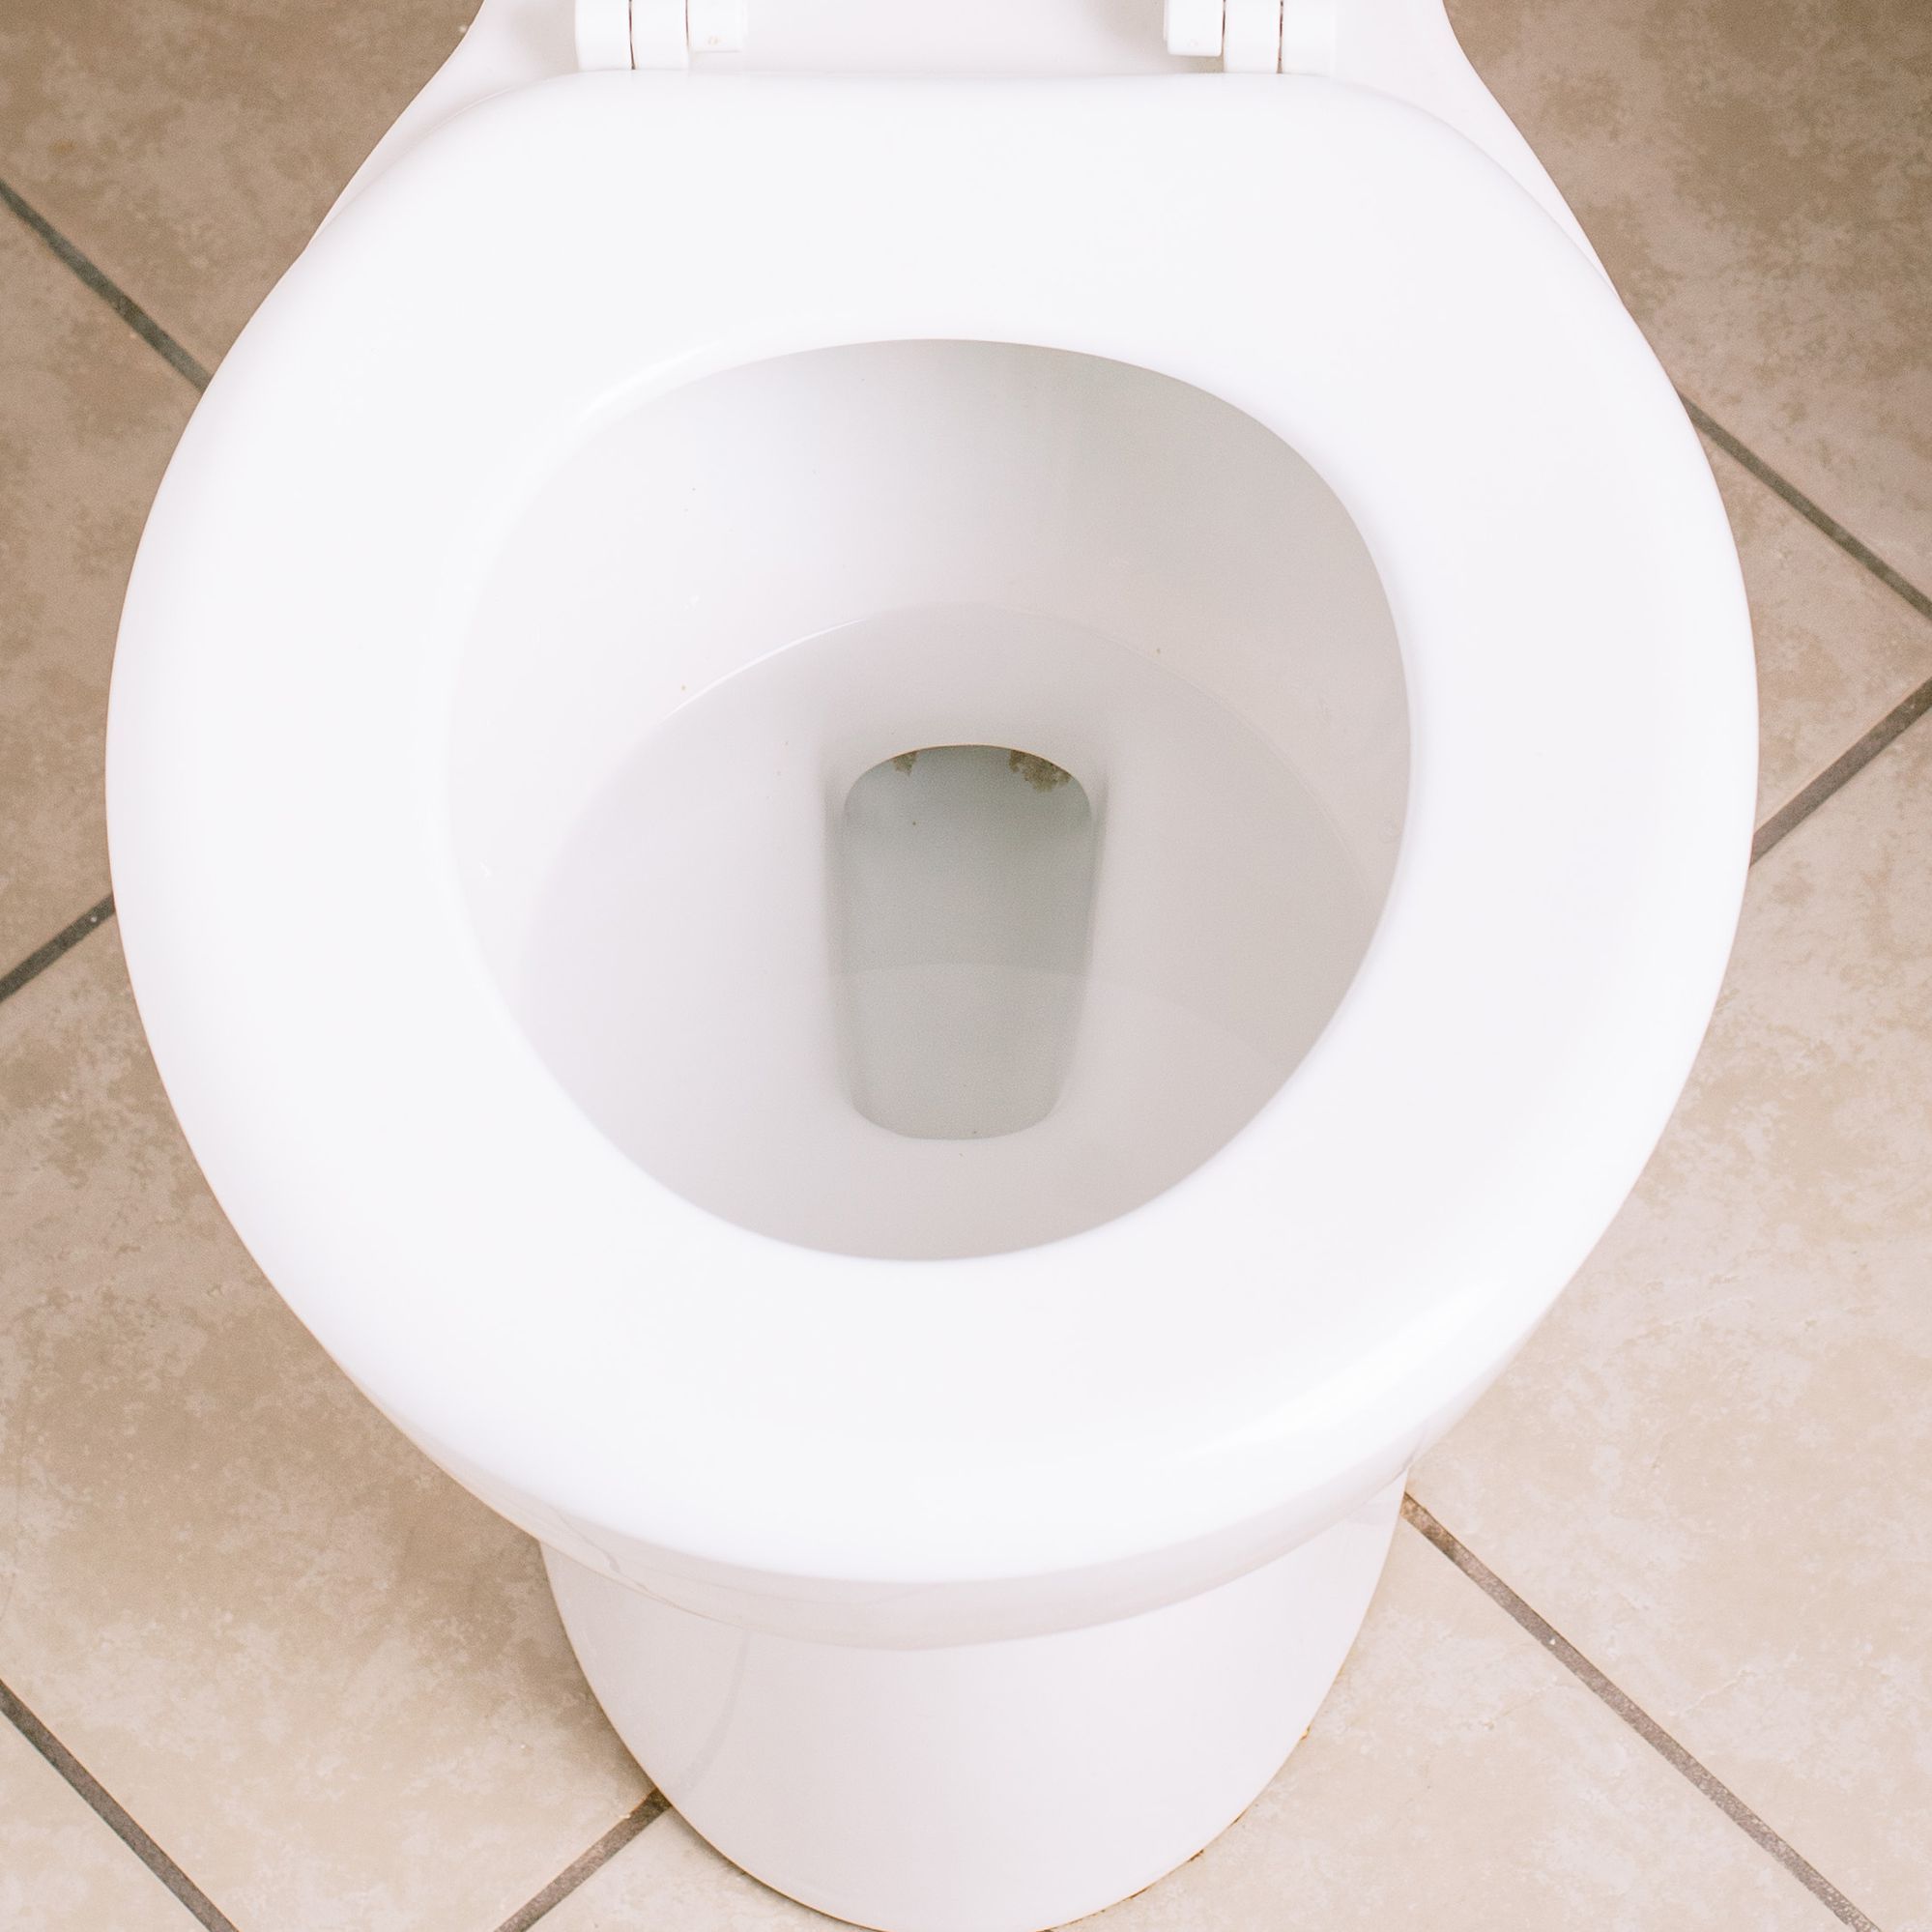 Fresno man glued to toilet in prank gone wrong